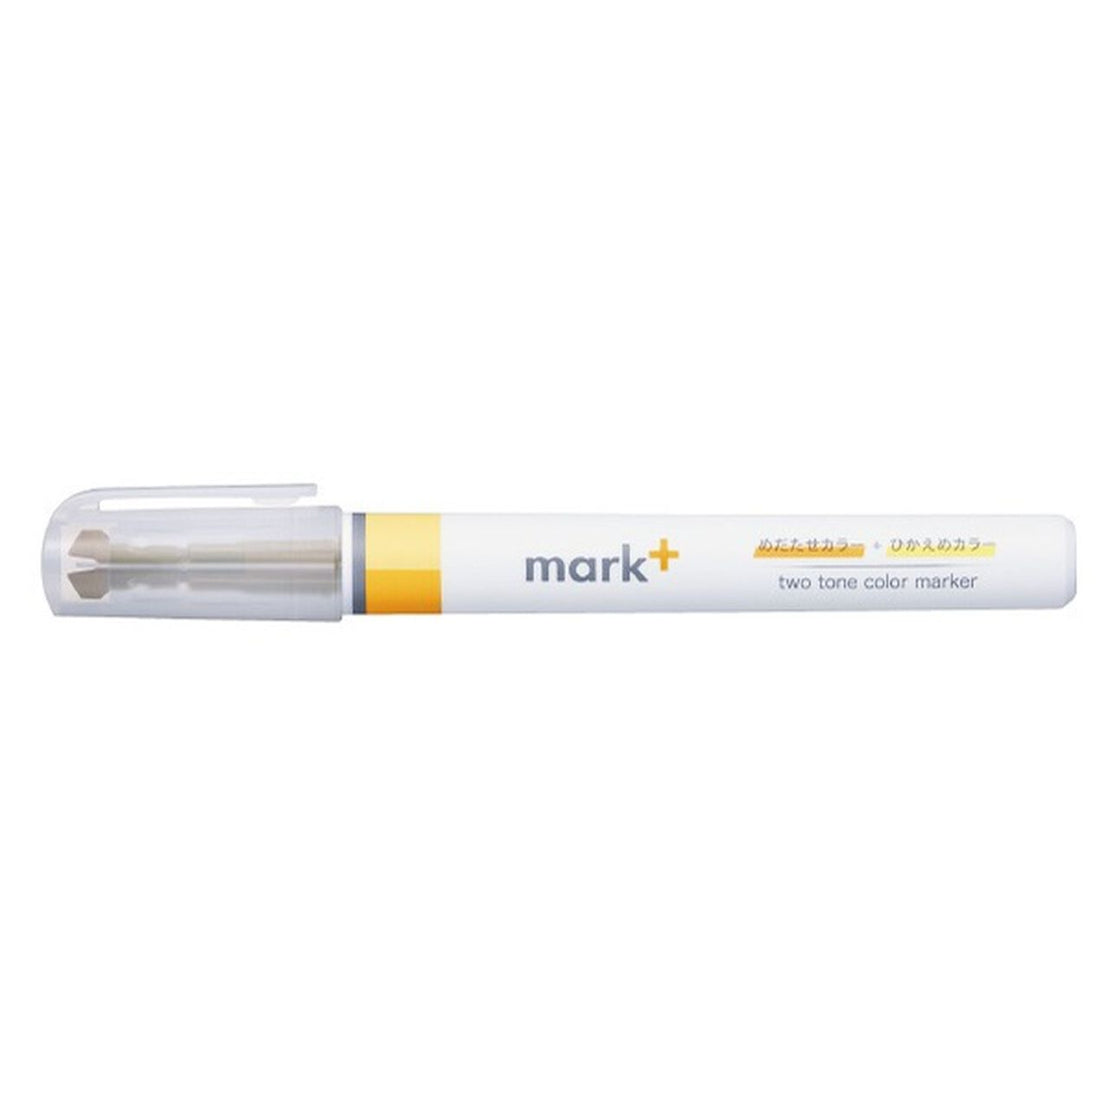 Mark+ Dual Tone Highlighter